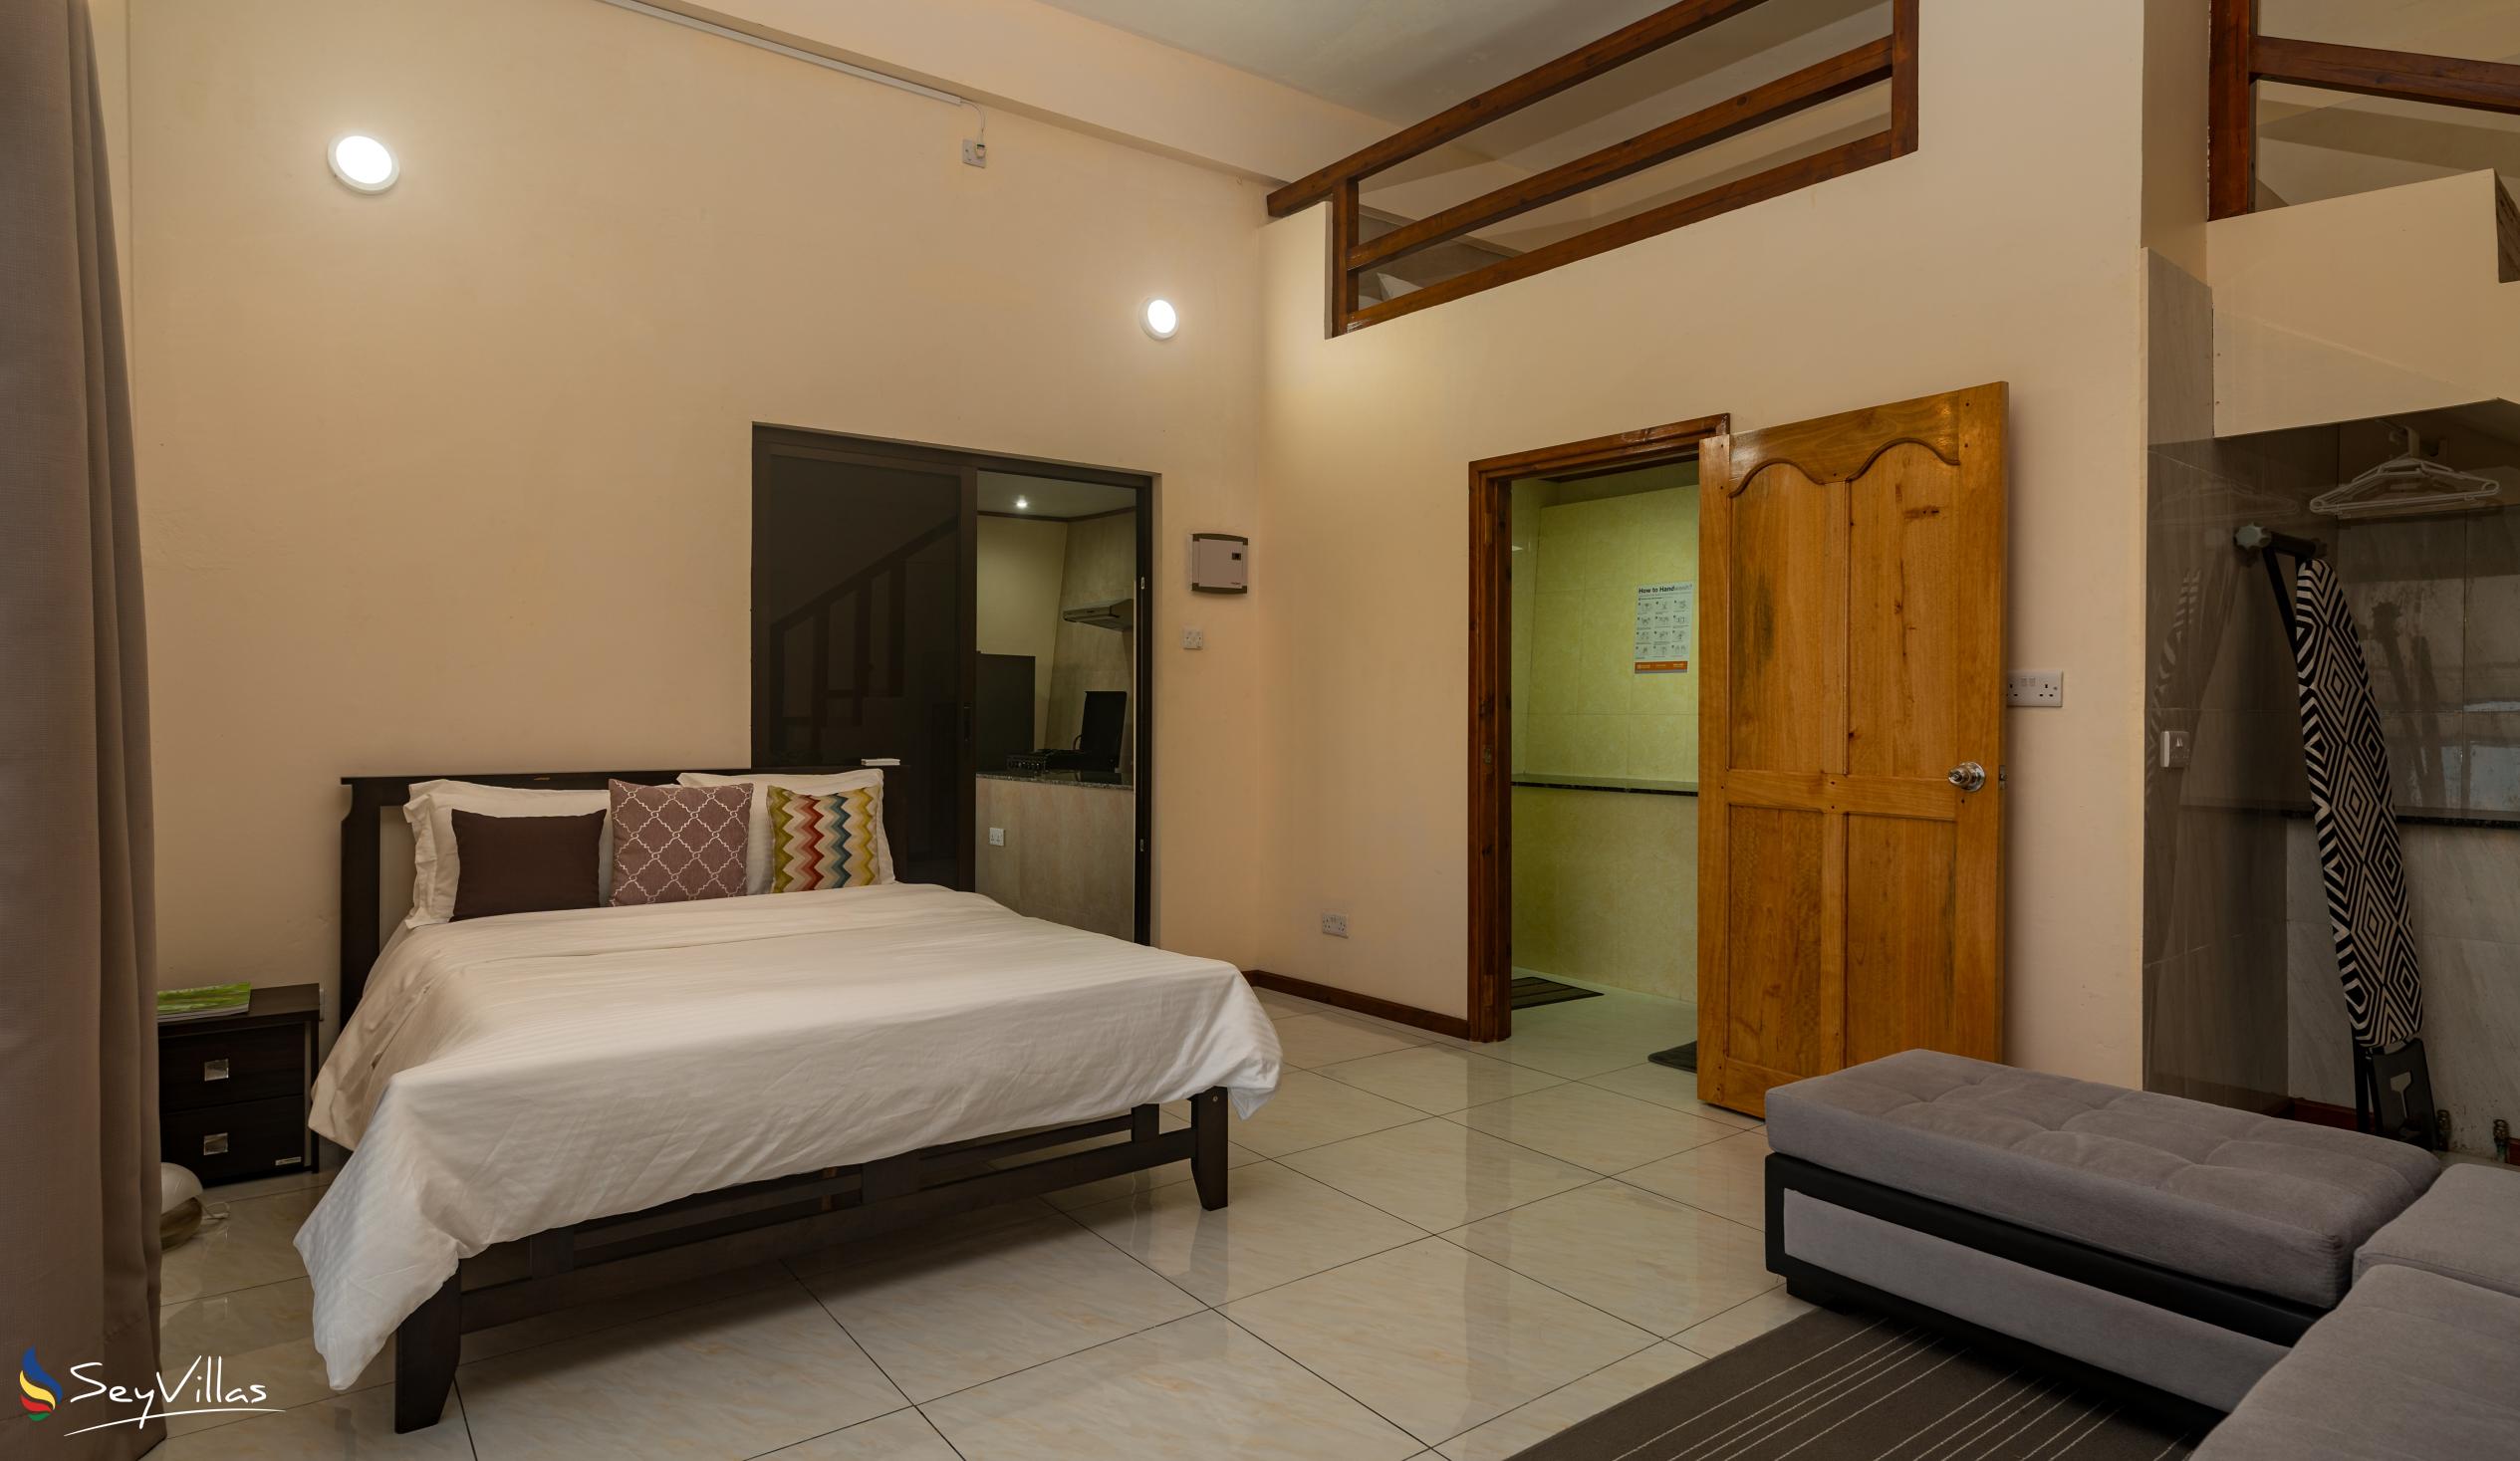 Photo 58: Maison L'Horizon - 1-Bedroom Apartment Lalin - Mahé (Seychelles)